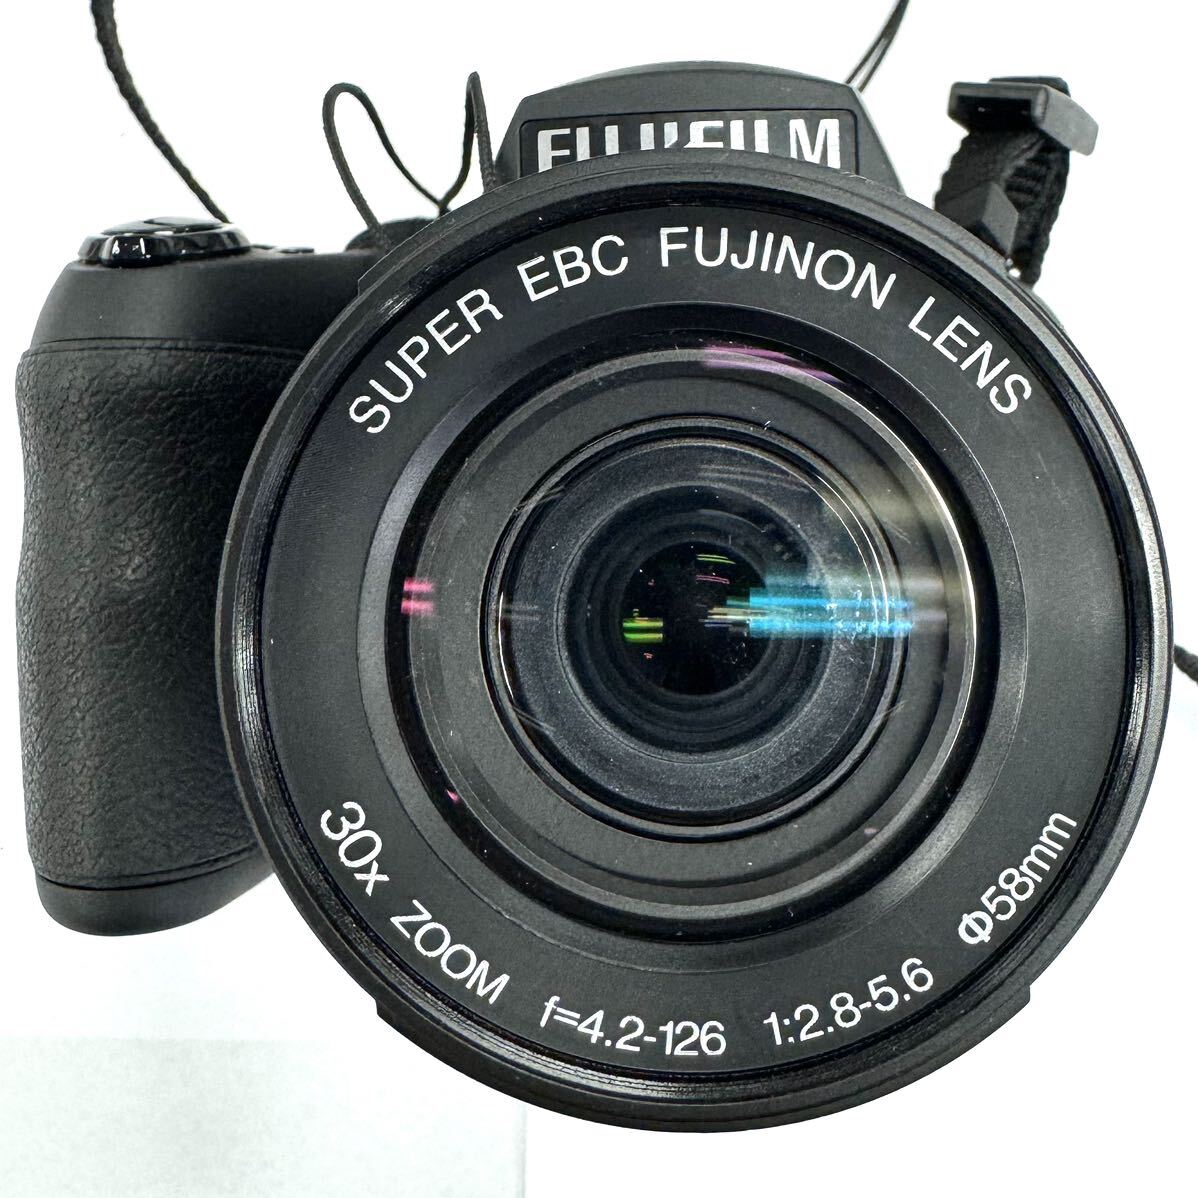 A0008 カメラ デジタルカメラ FUJIFILM 1A001459 SUPER EBC FUJINON LENS 30×ZOOM f＝4.2-126 1:2:8-5.6 58mm ジャンク品 訳あり 中古の画像2